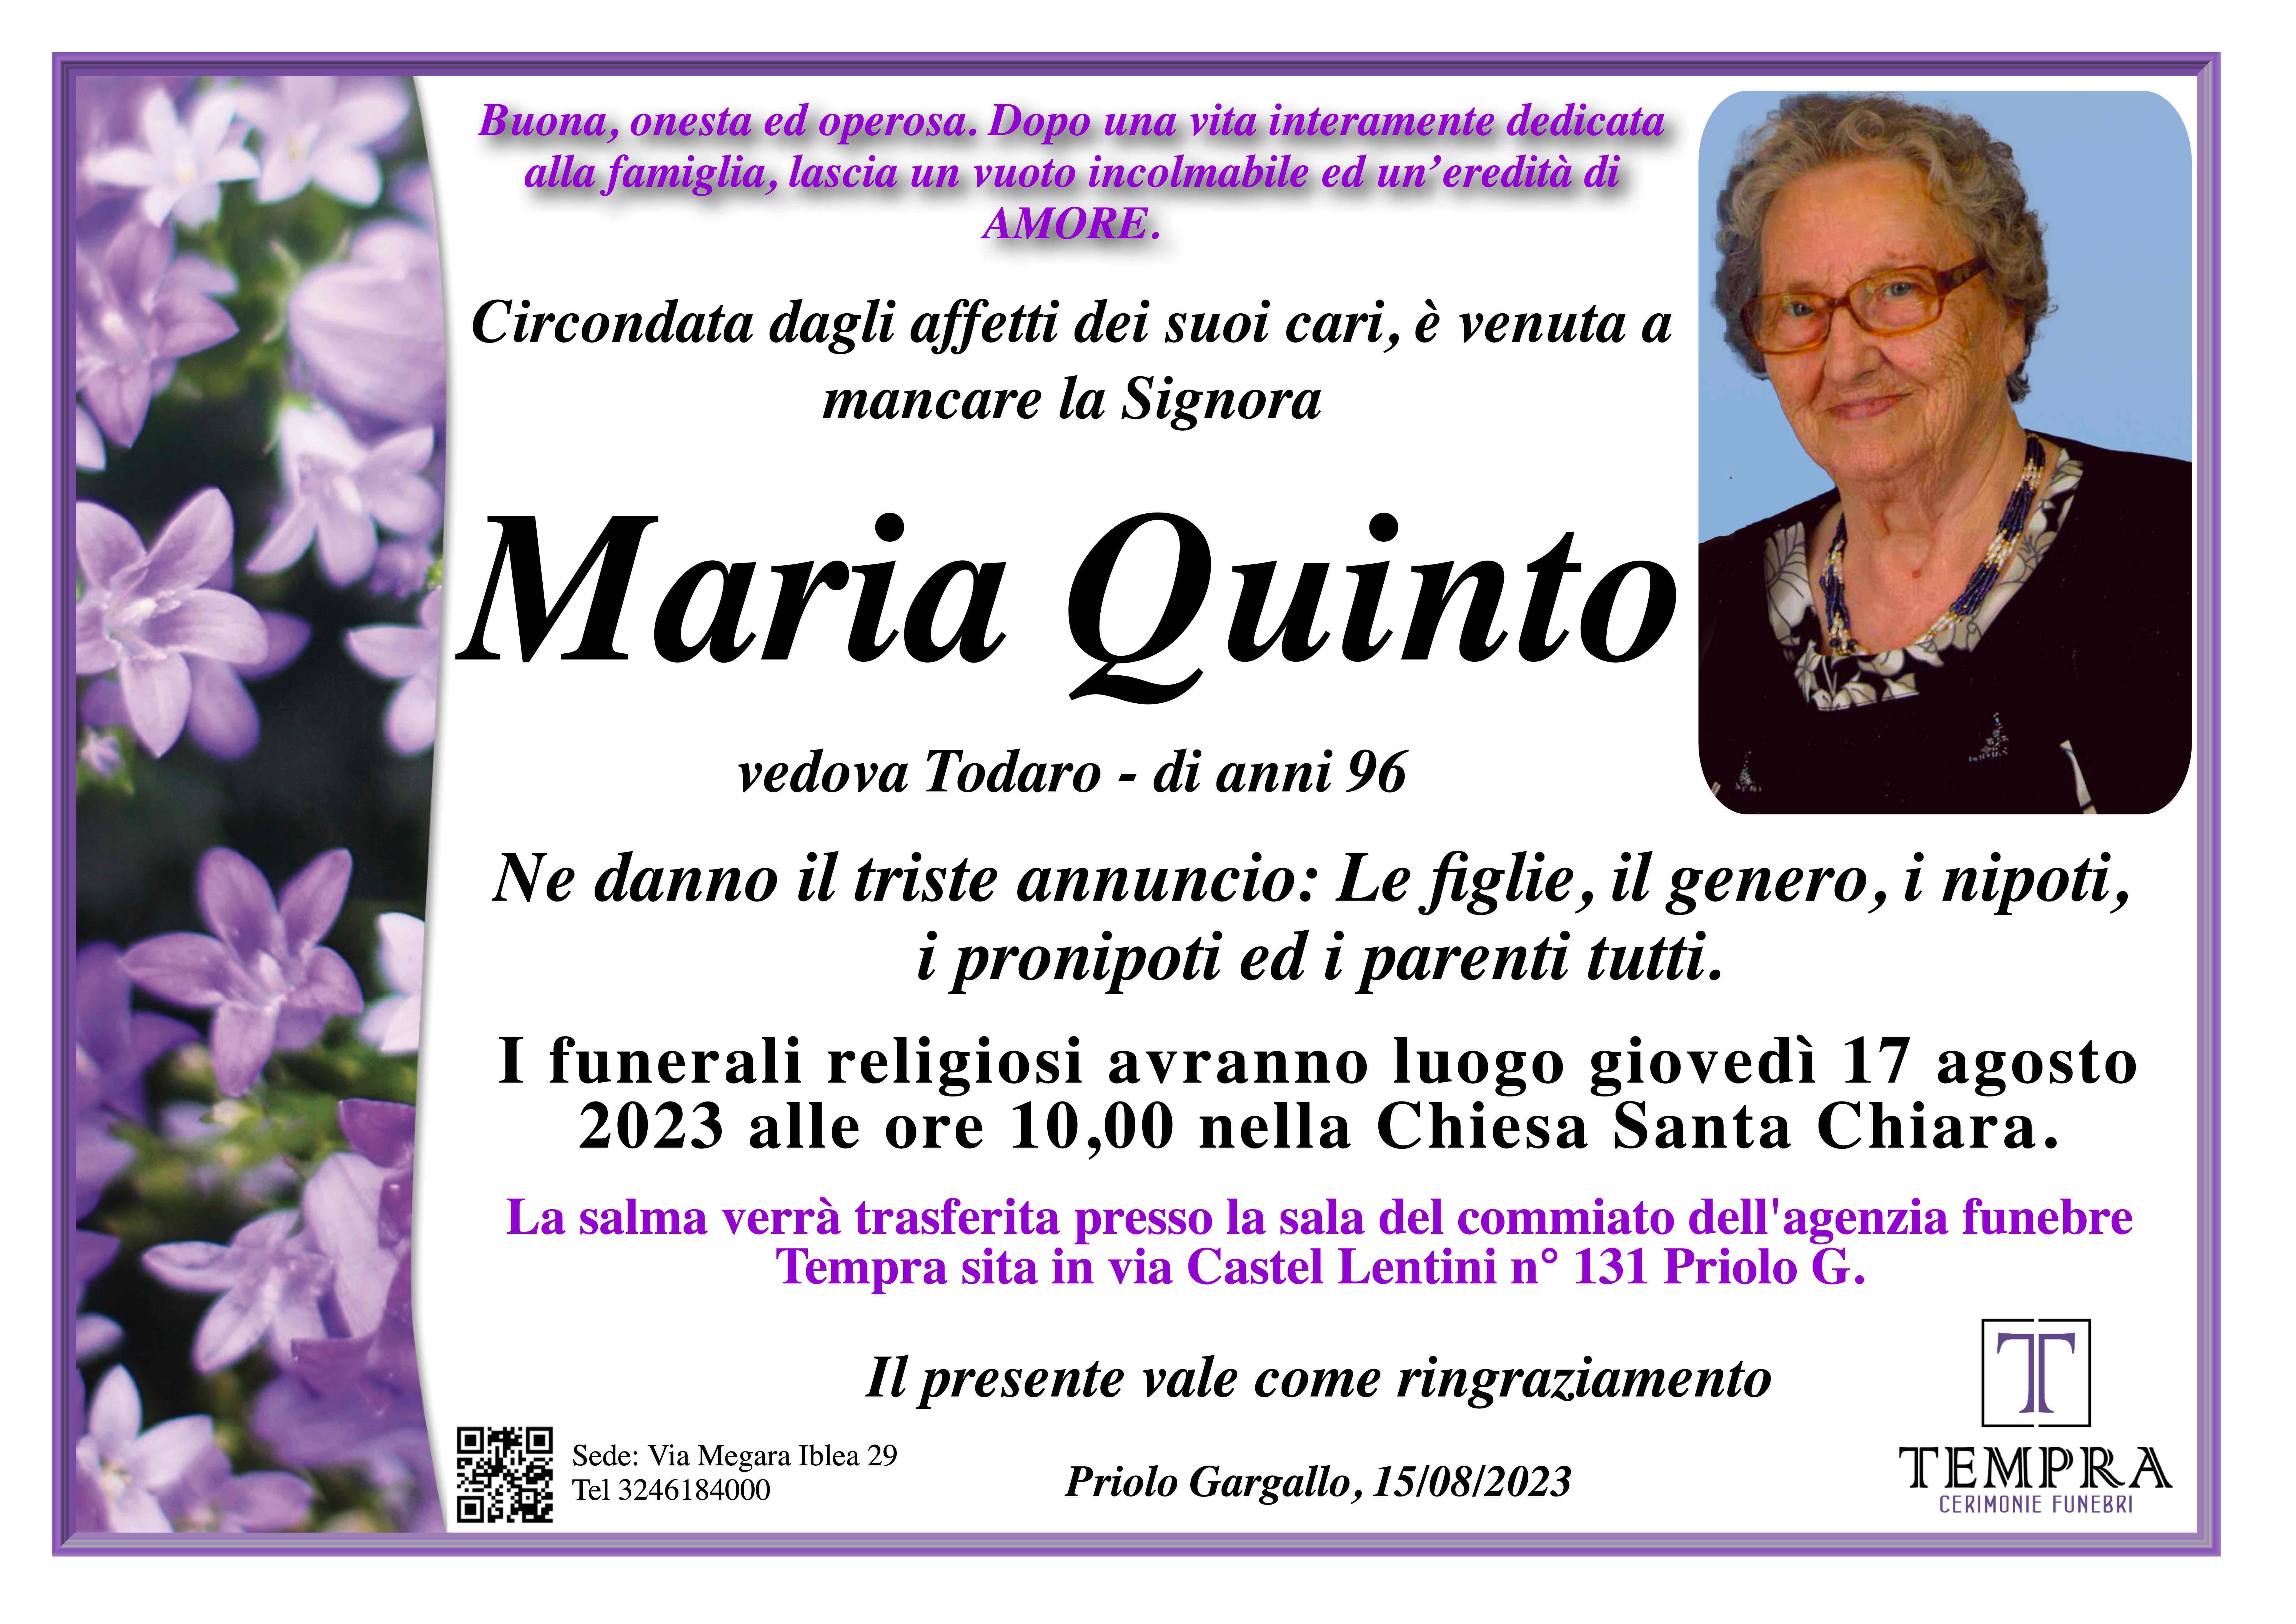 Maria Quinto